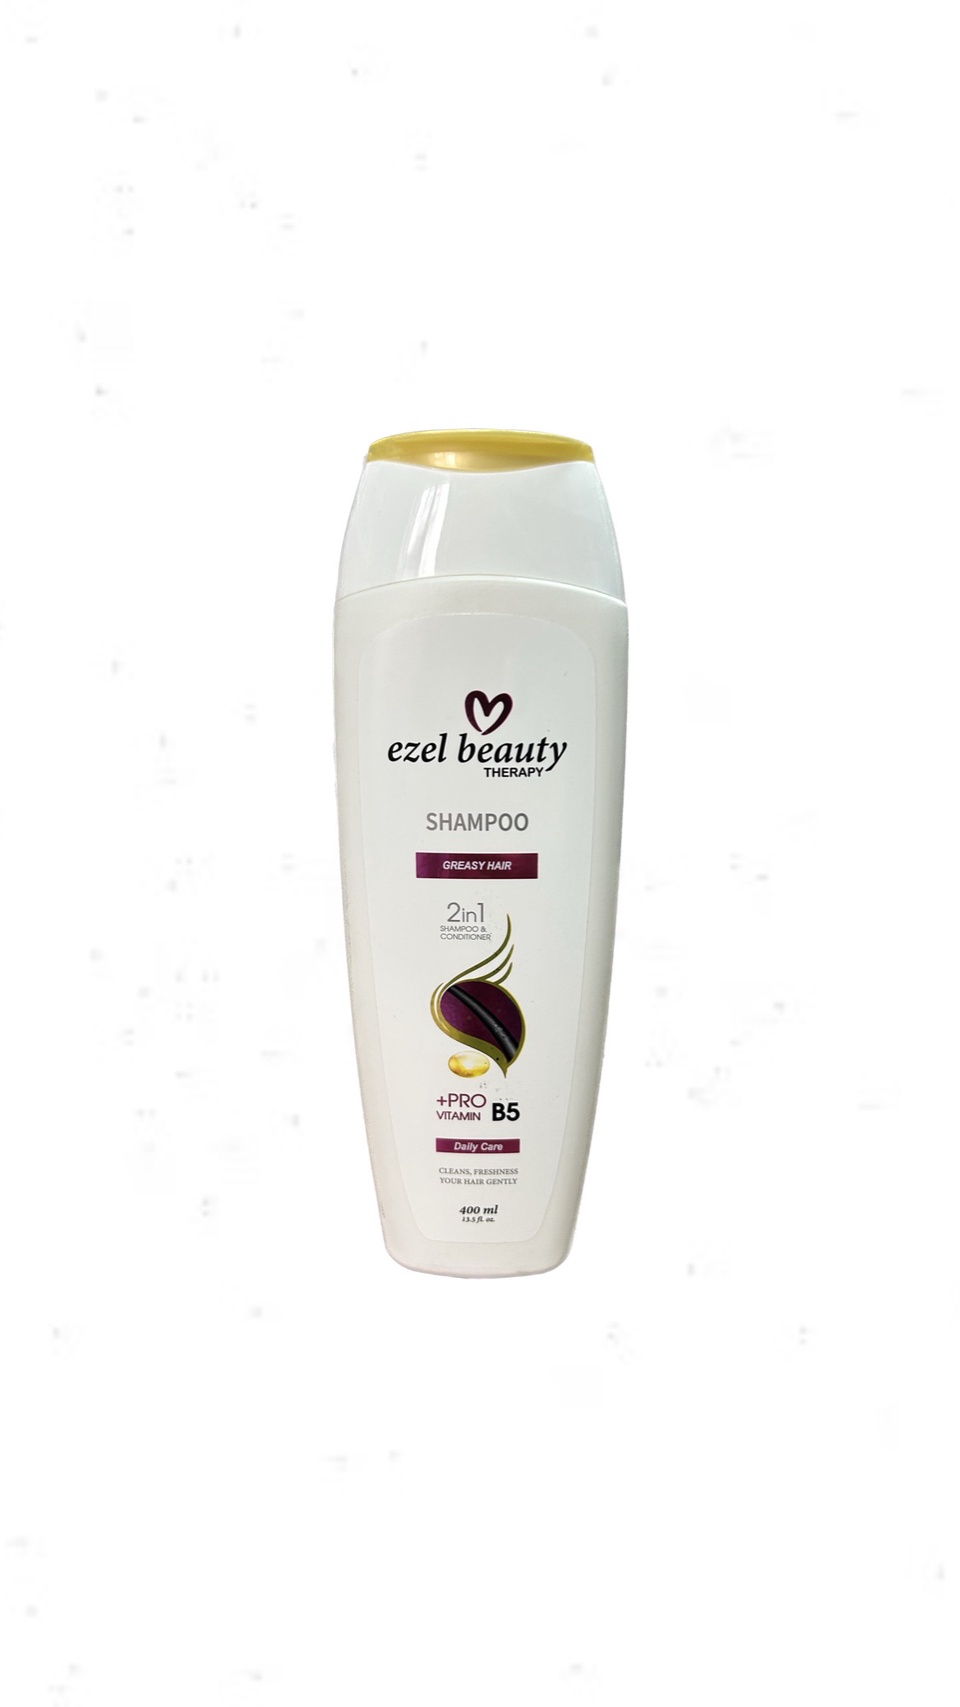 Ezel beauty Therapy Шампунь/кондиционер 2in1 Для жирных волос 400ml - 220 ₽, заказать онлайн.